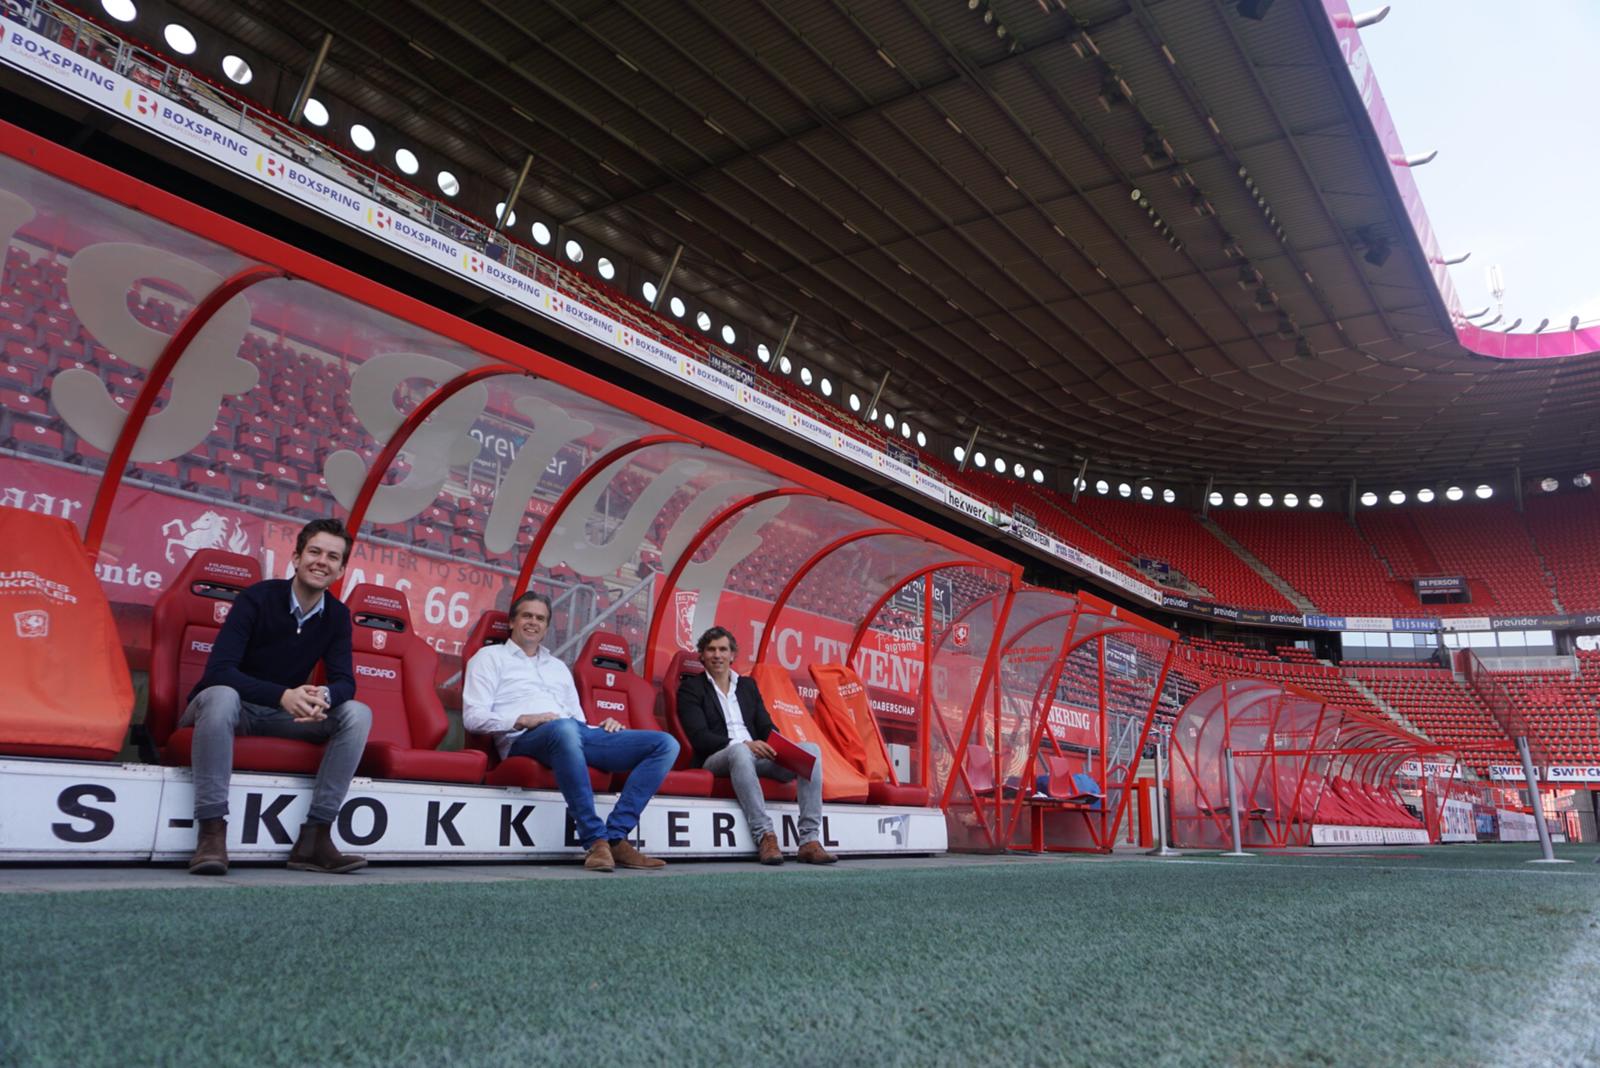 iQ Makelaars & 123Wonen komend seizoen sponsor FC Twente!